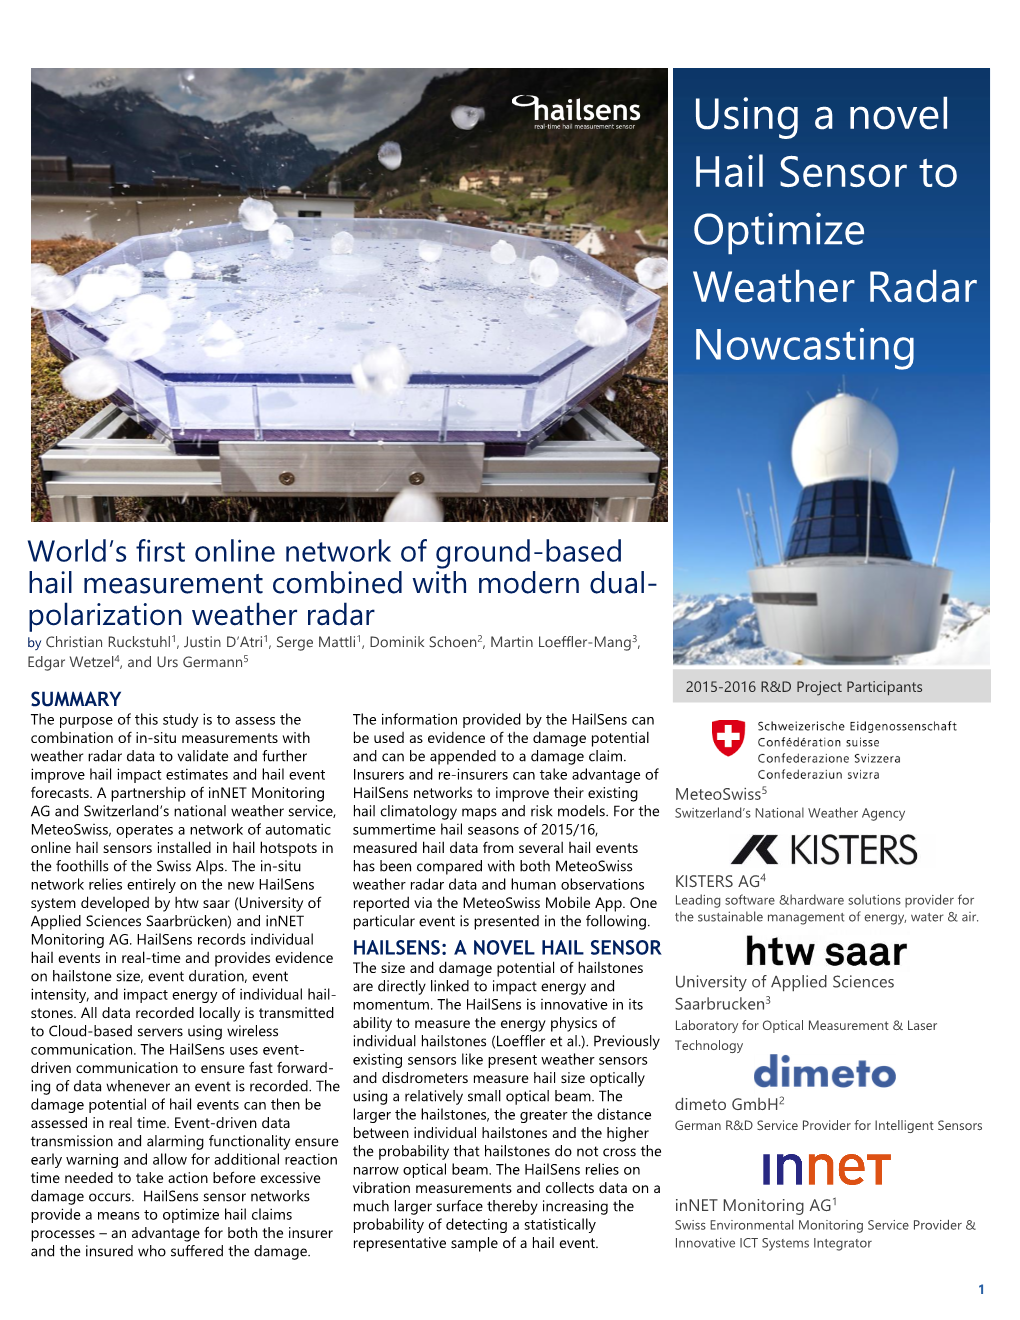 Using a Novel Hail Sensor to Optimize Weather Radar Nowcasting